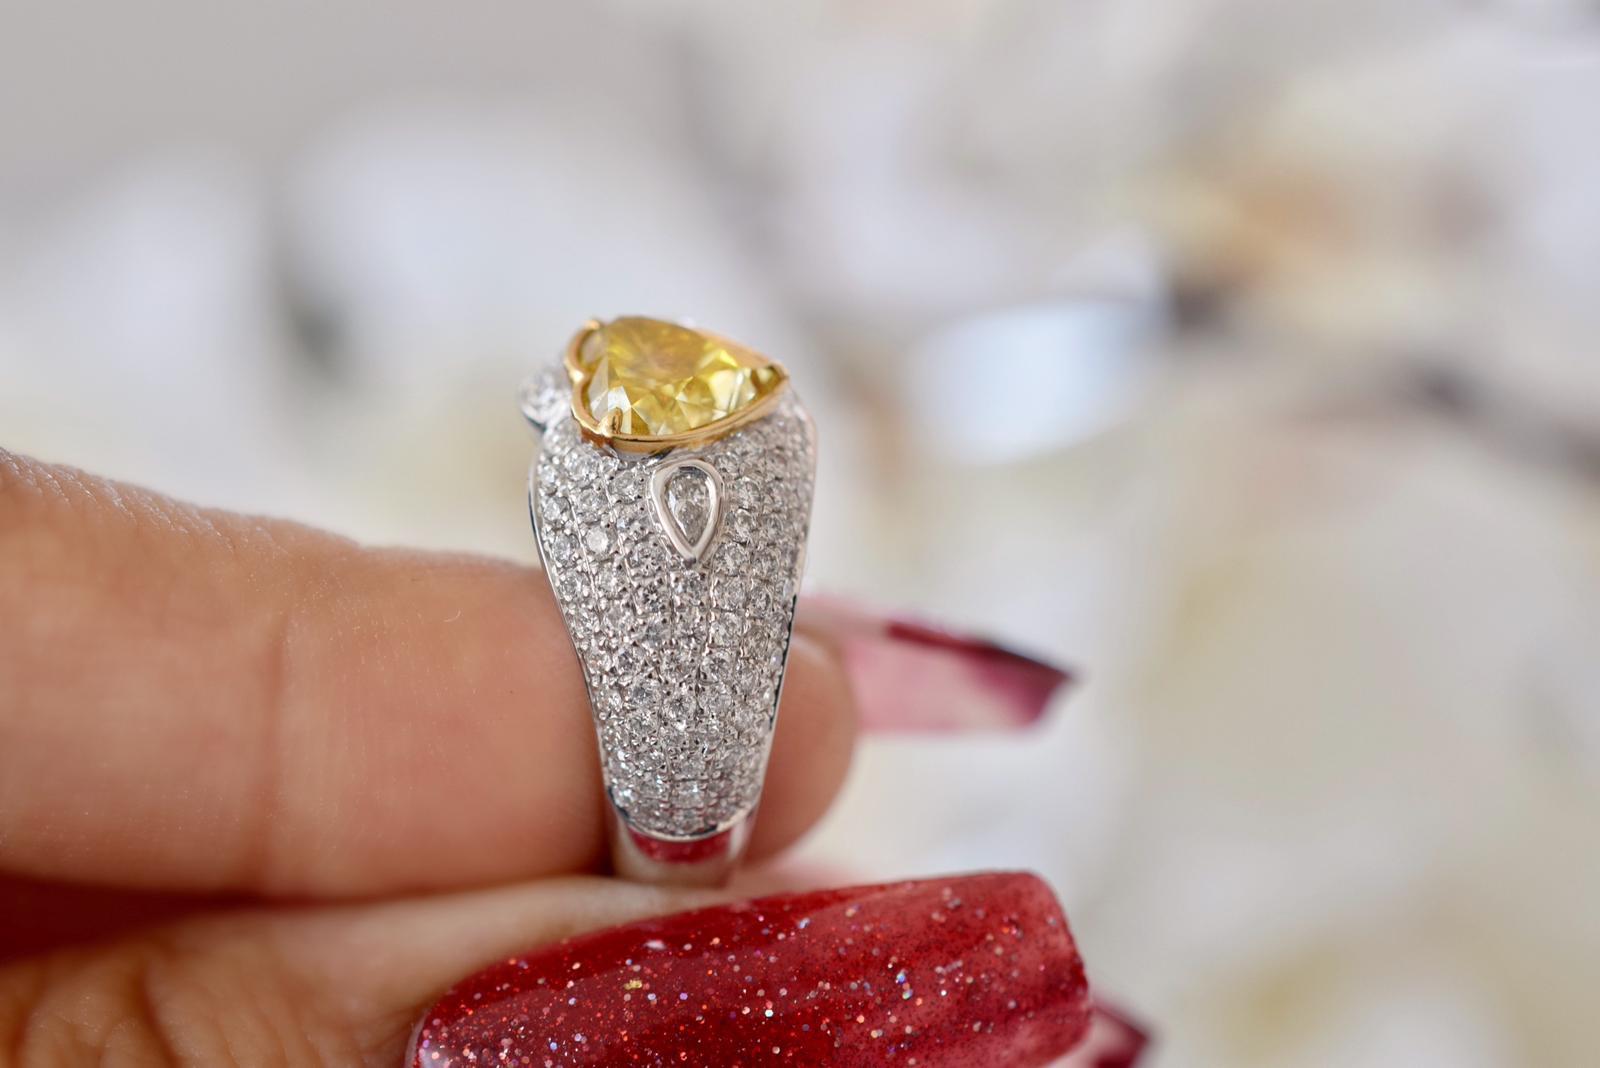 Heart Cut 2.01 Carat Fancy Light Yellow Diamond Ring VS1 Clarity GIA Certified  For Sale